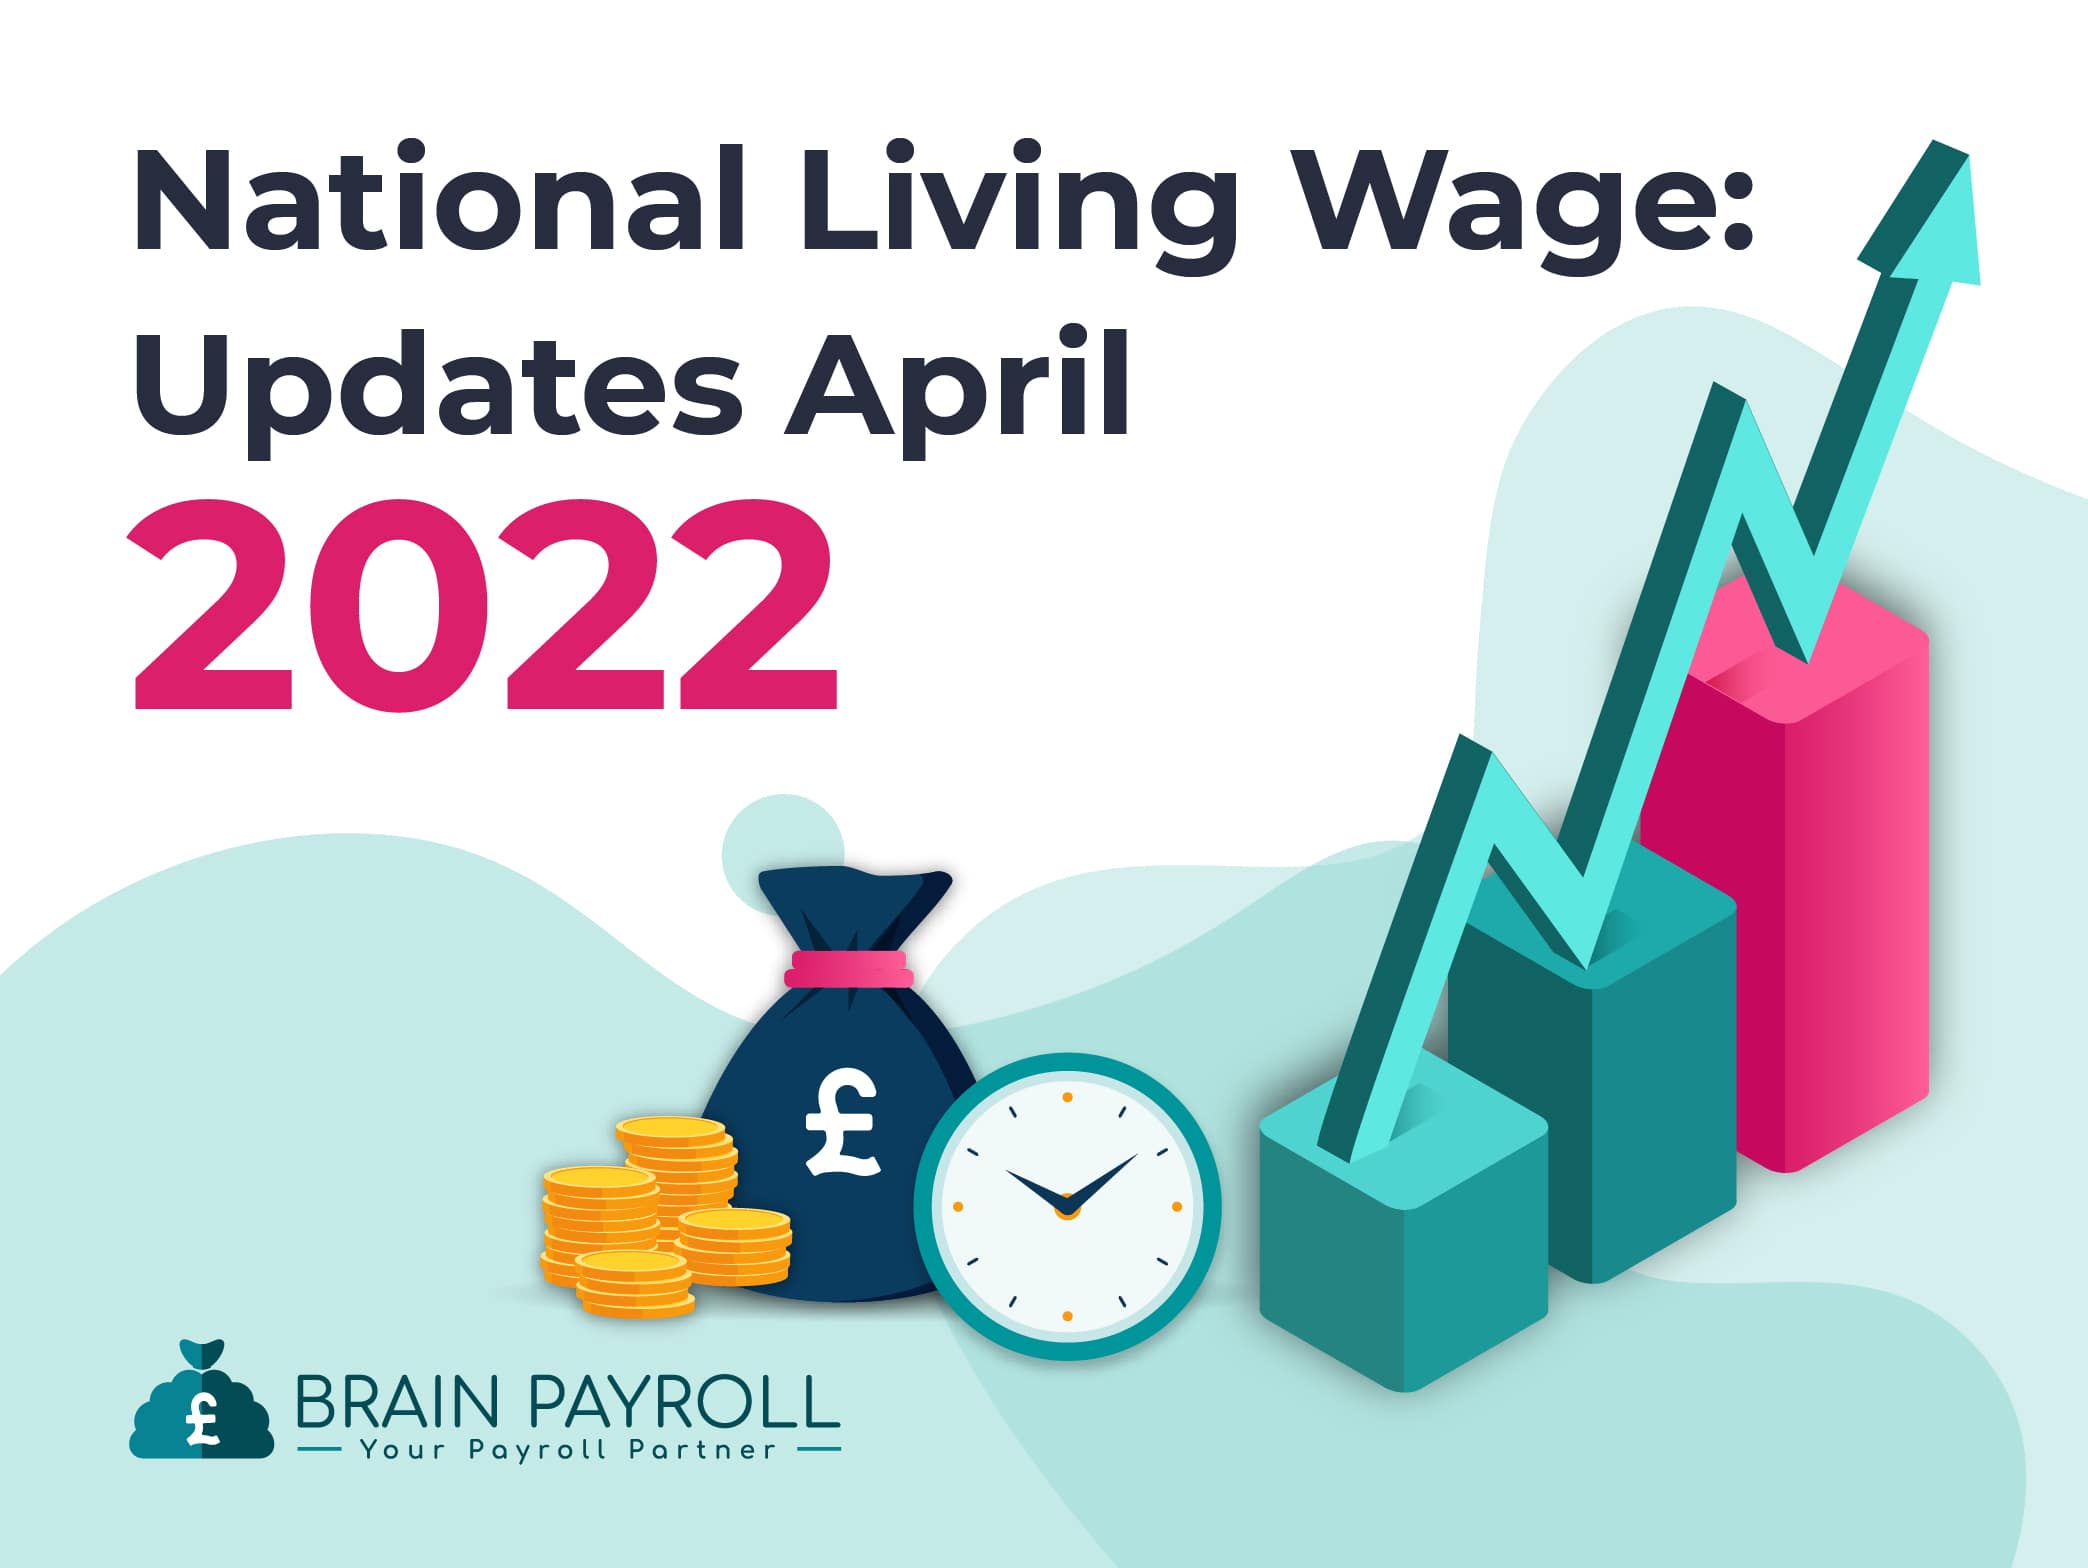 National Living Wage Updates April 2022